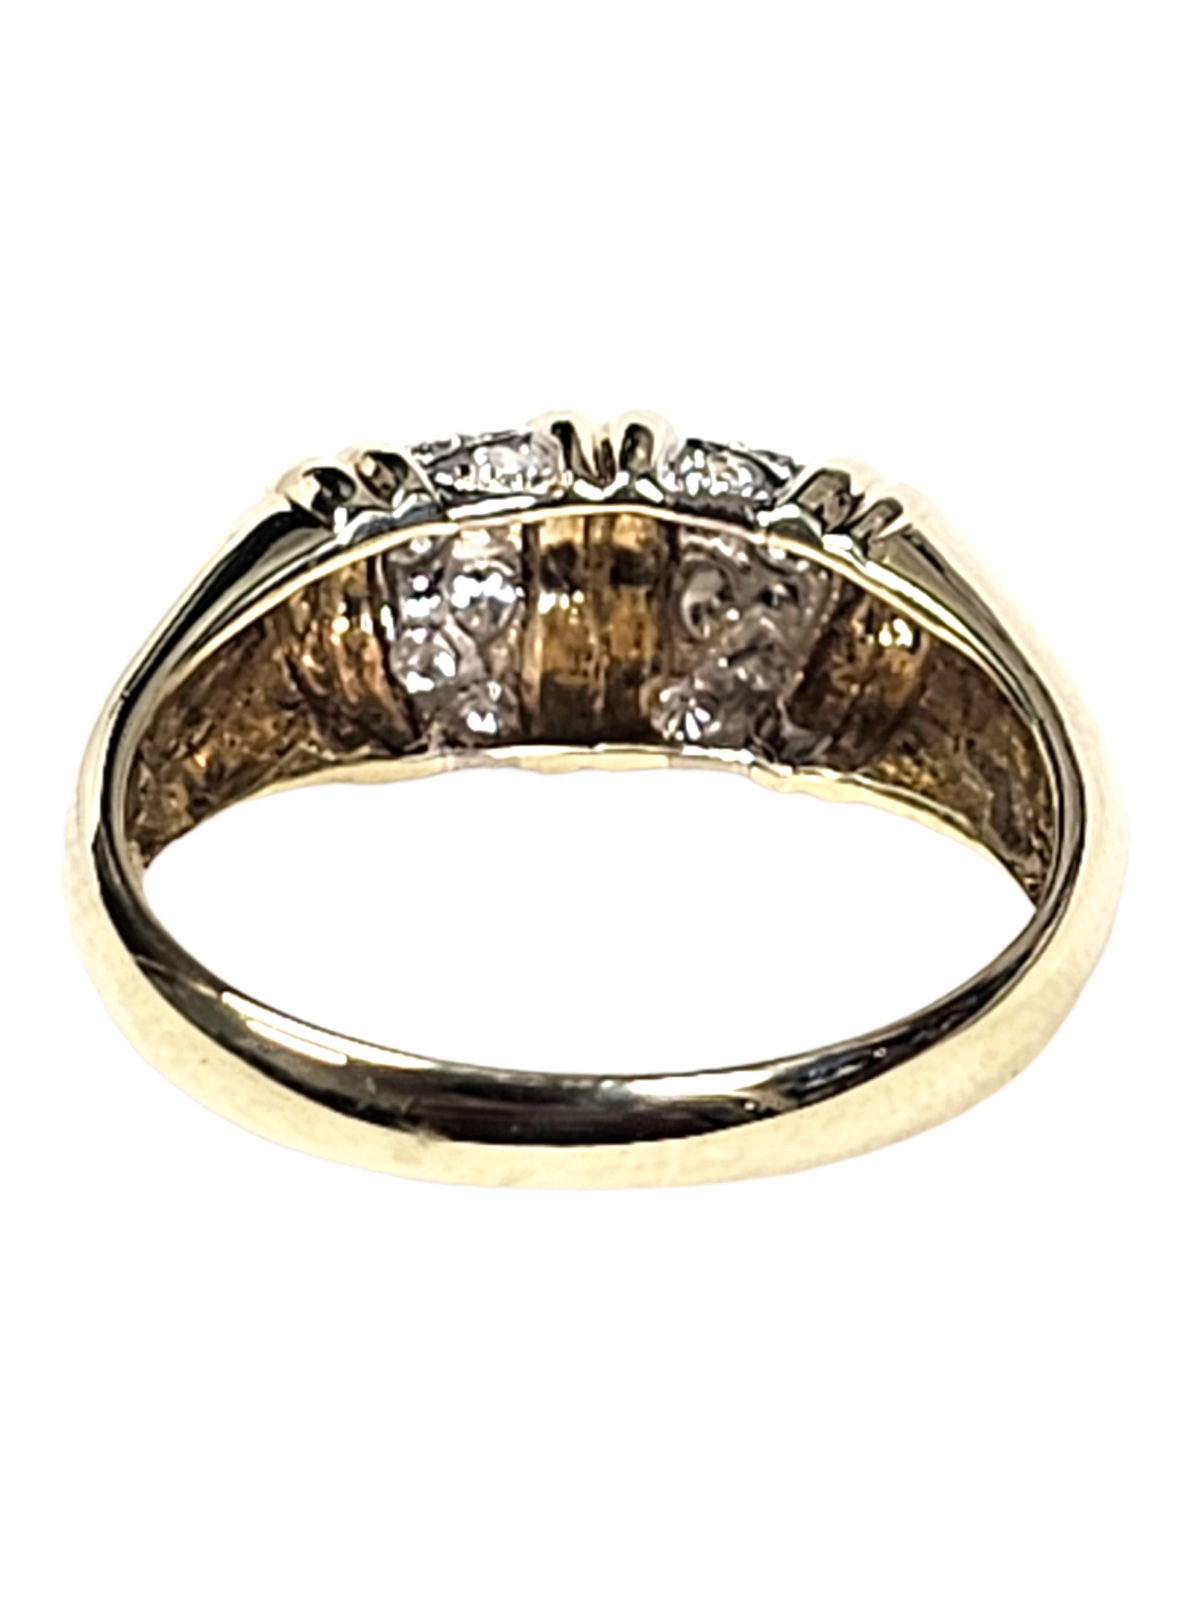 14K Yellow Gold Diamond Cluster Women's Band Ring Size 6.25